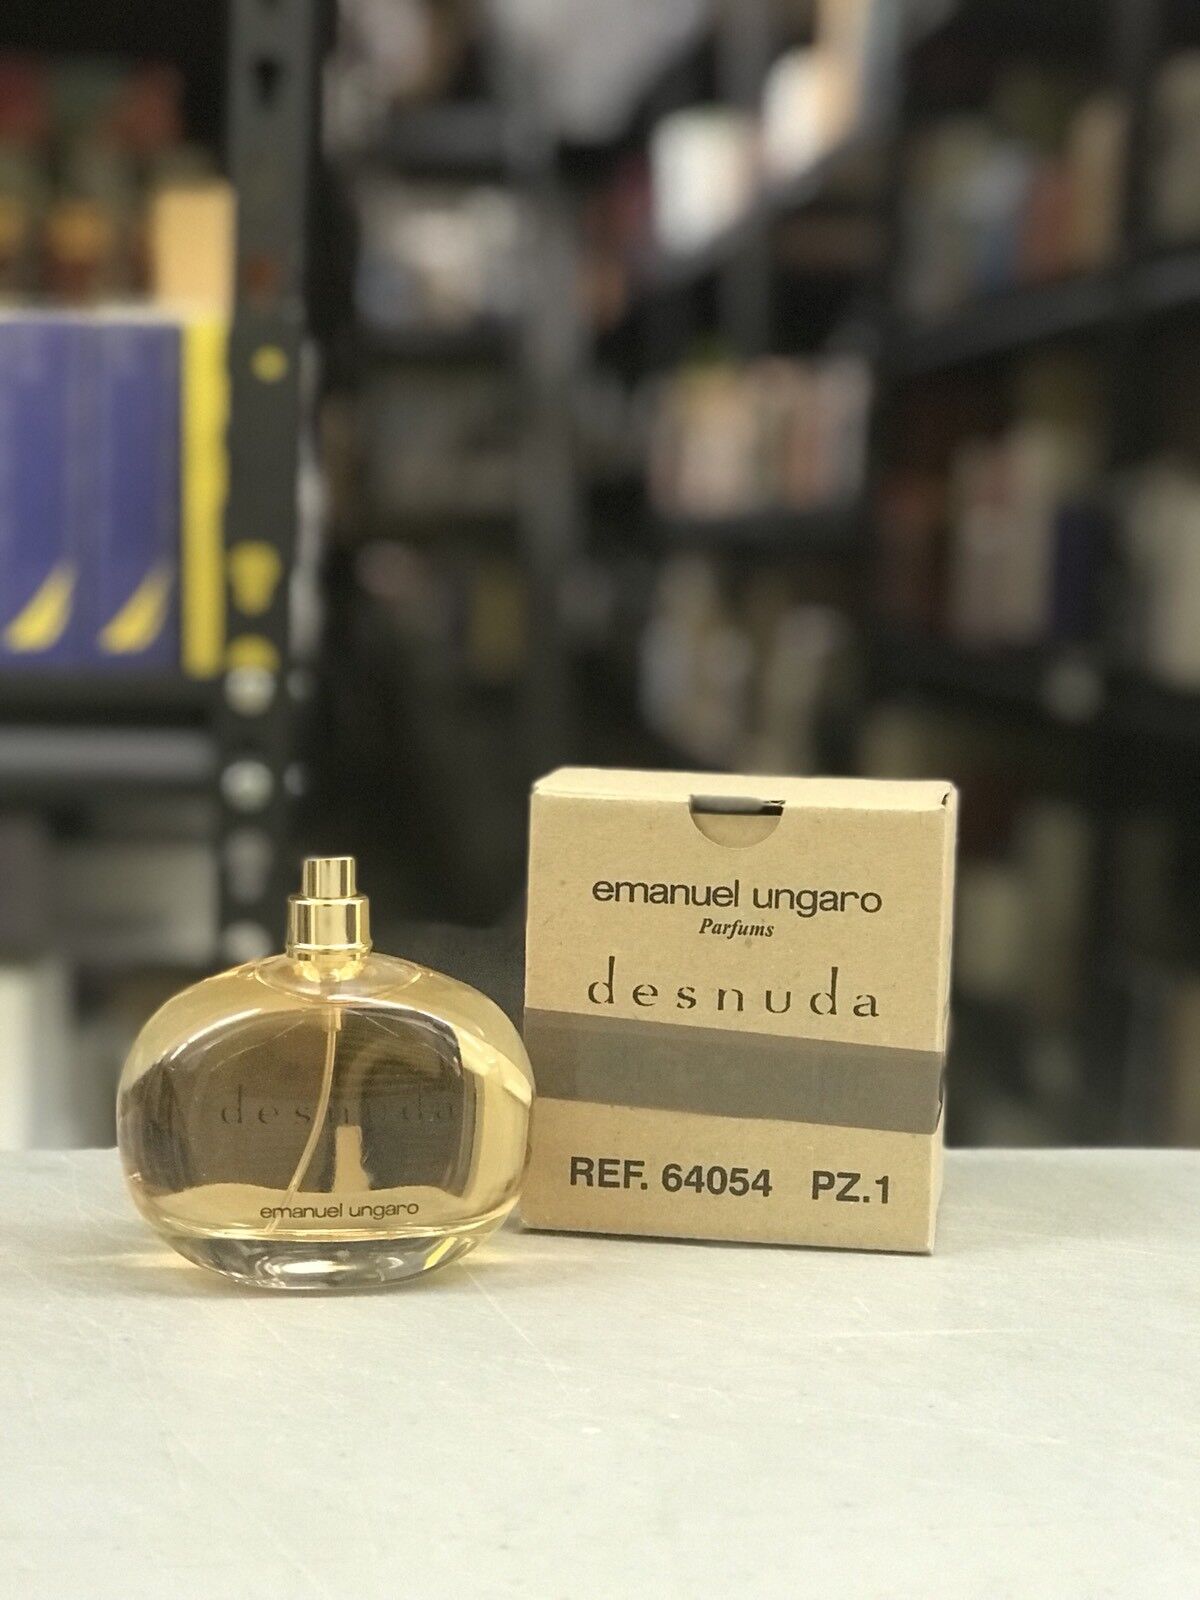 EMANUEL UNGARO DESNUDA by Emanuel Ungaro 3.4 oz. EDP Perfume Spray 